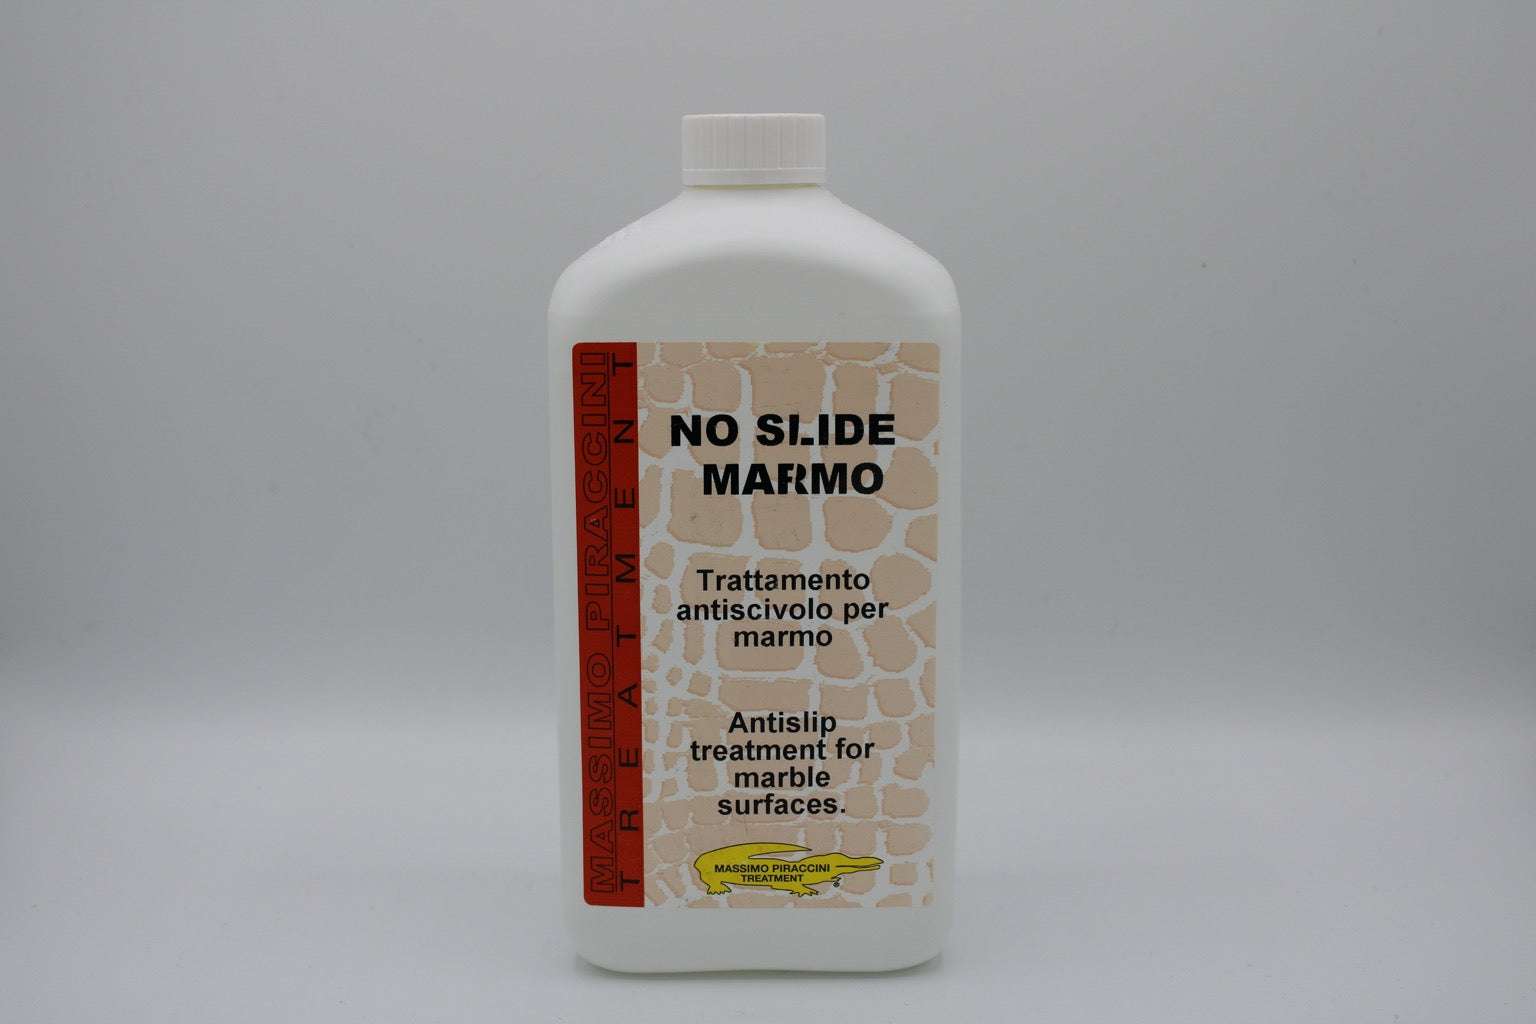 NO SLIDE MARMO – Anti-slip treatment for marble